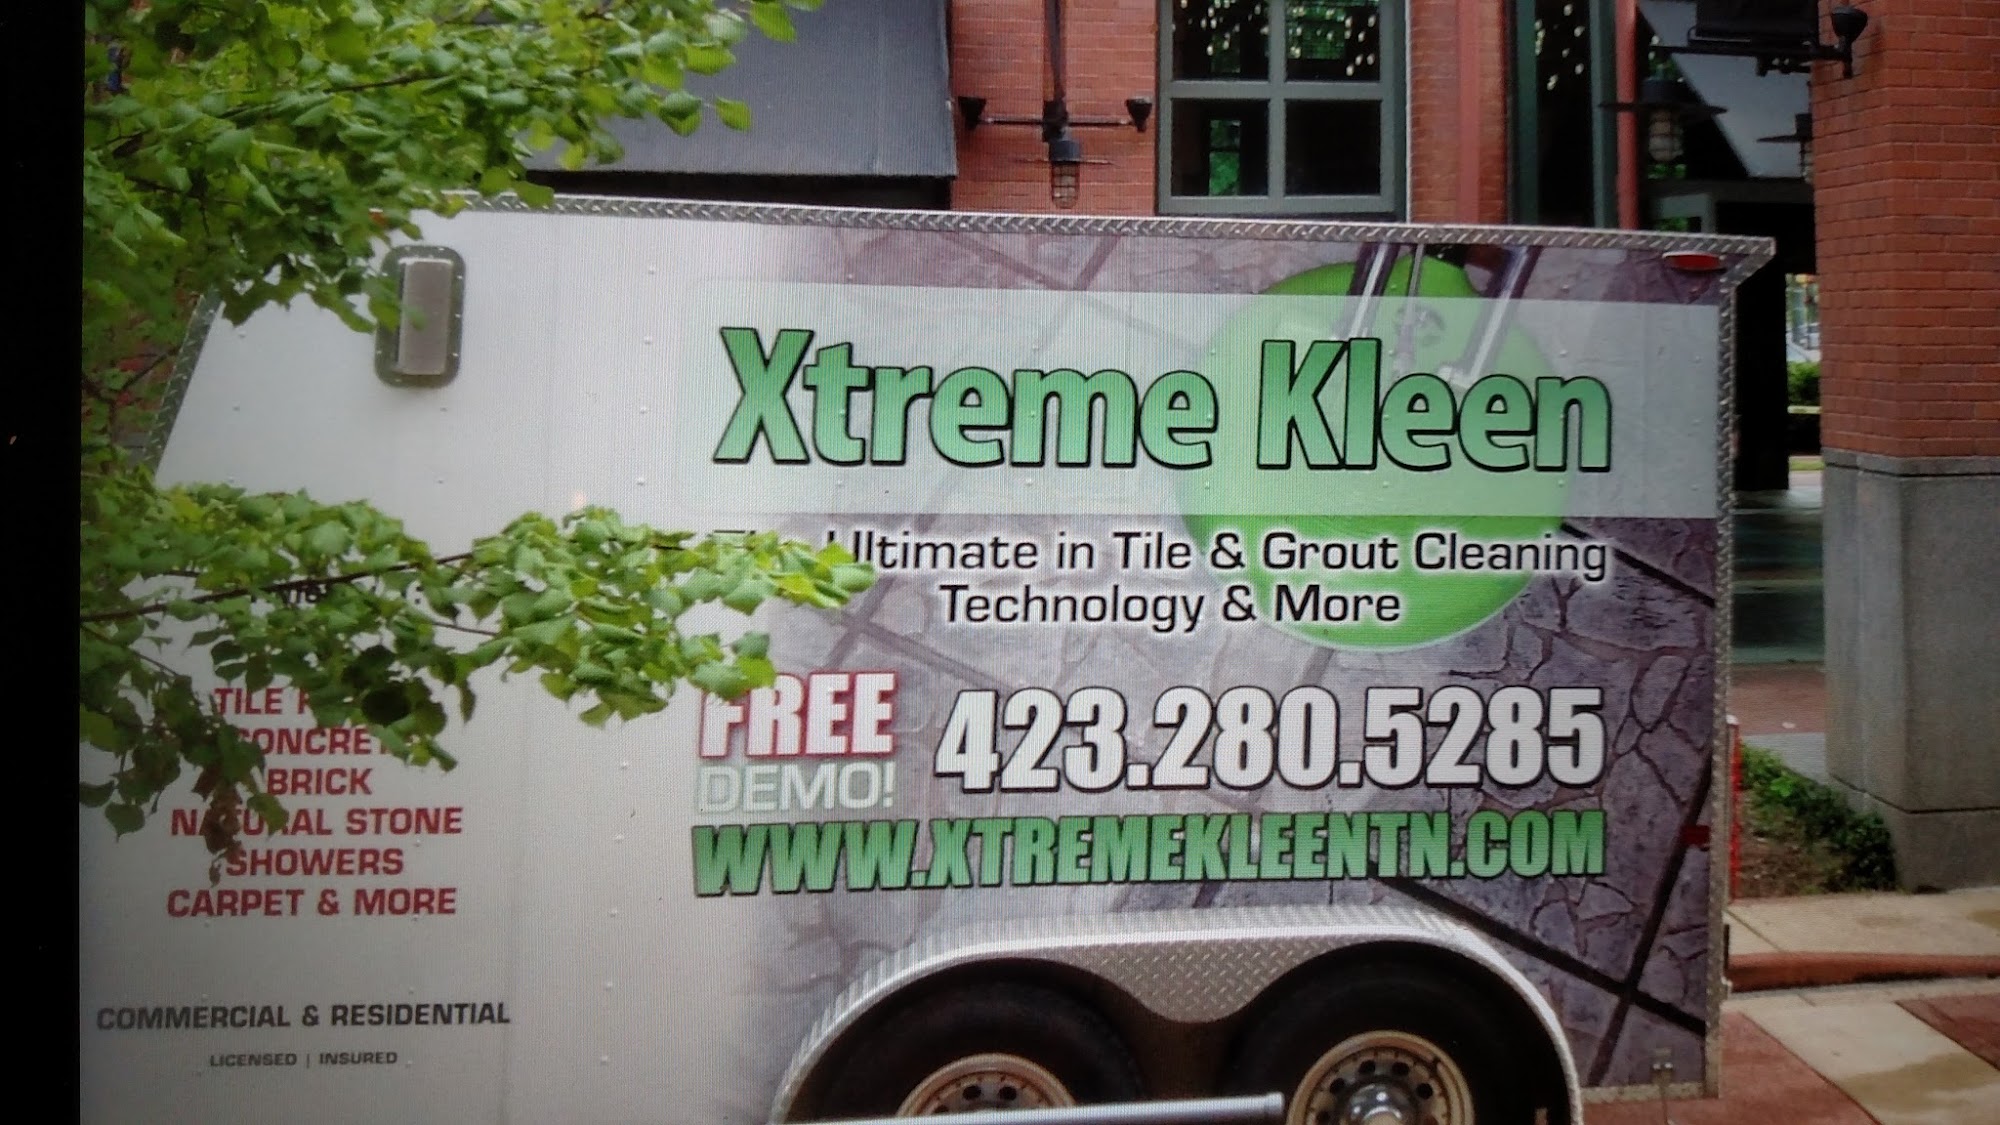 Xtreme Kleen